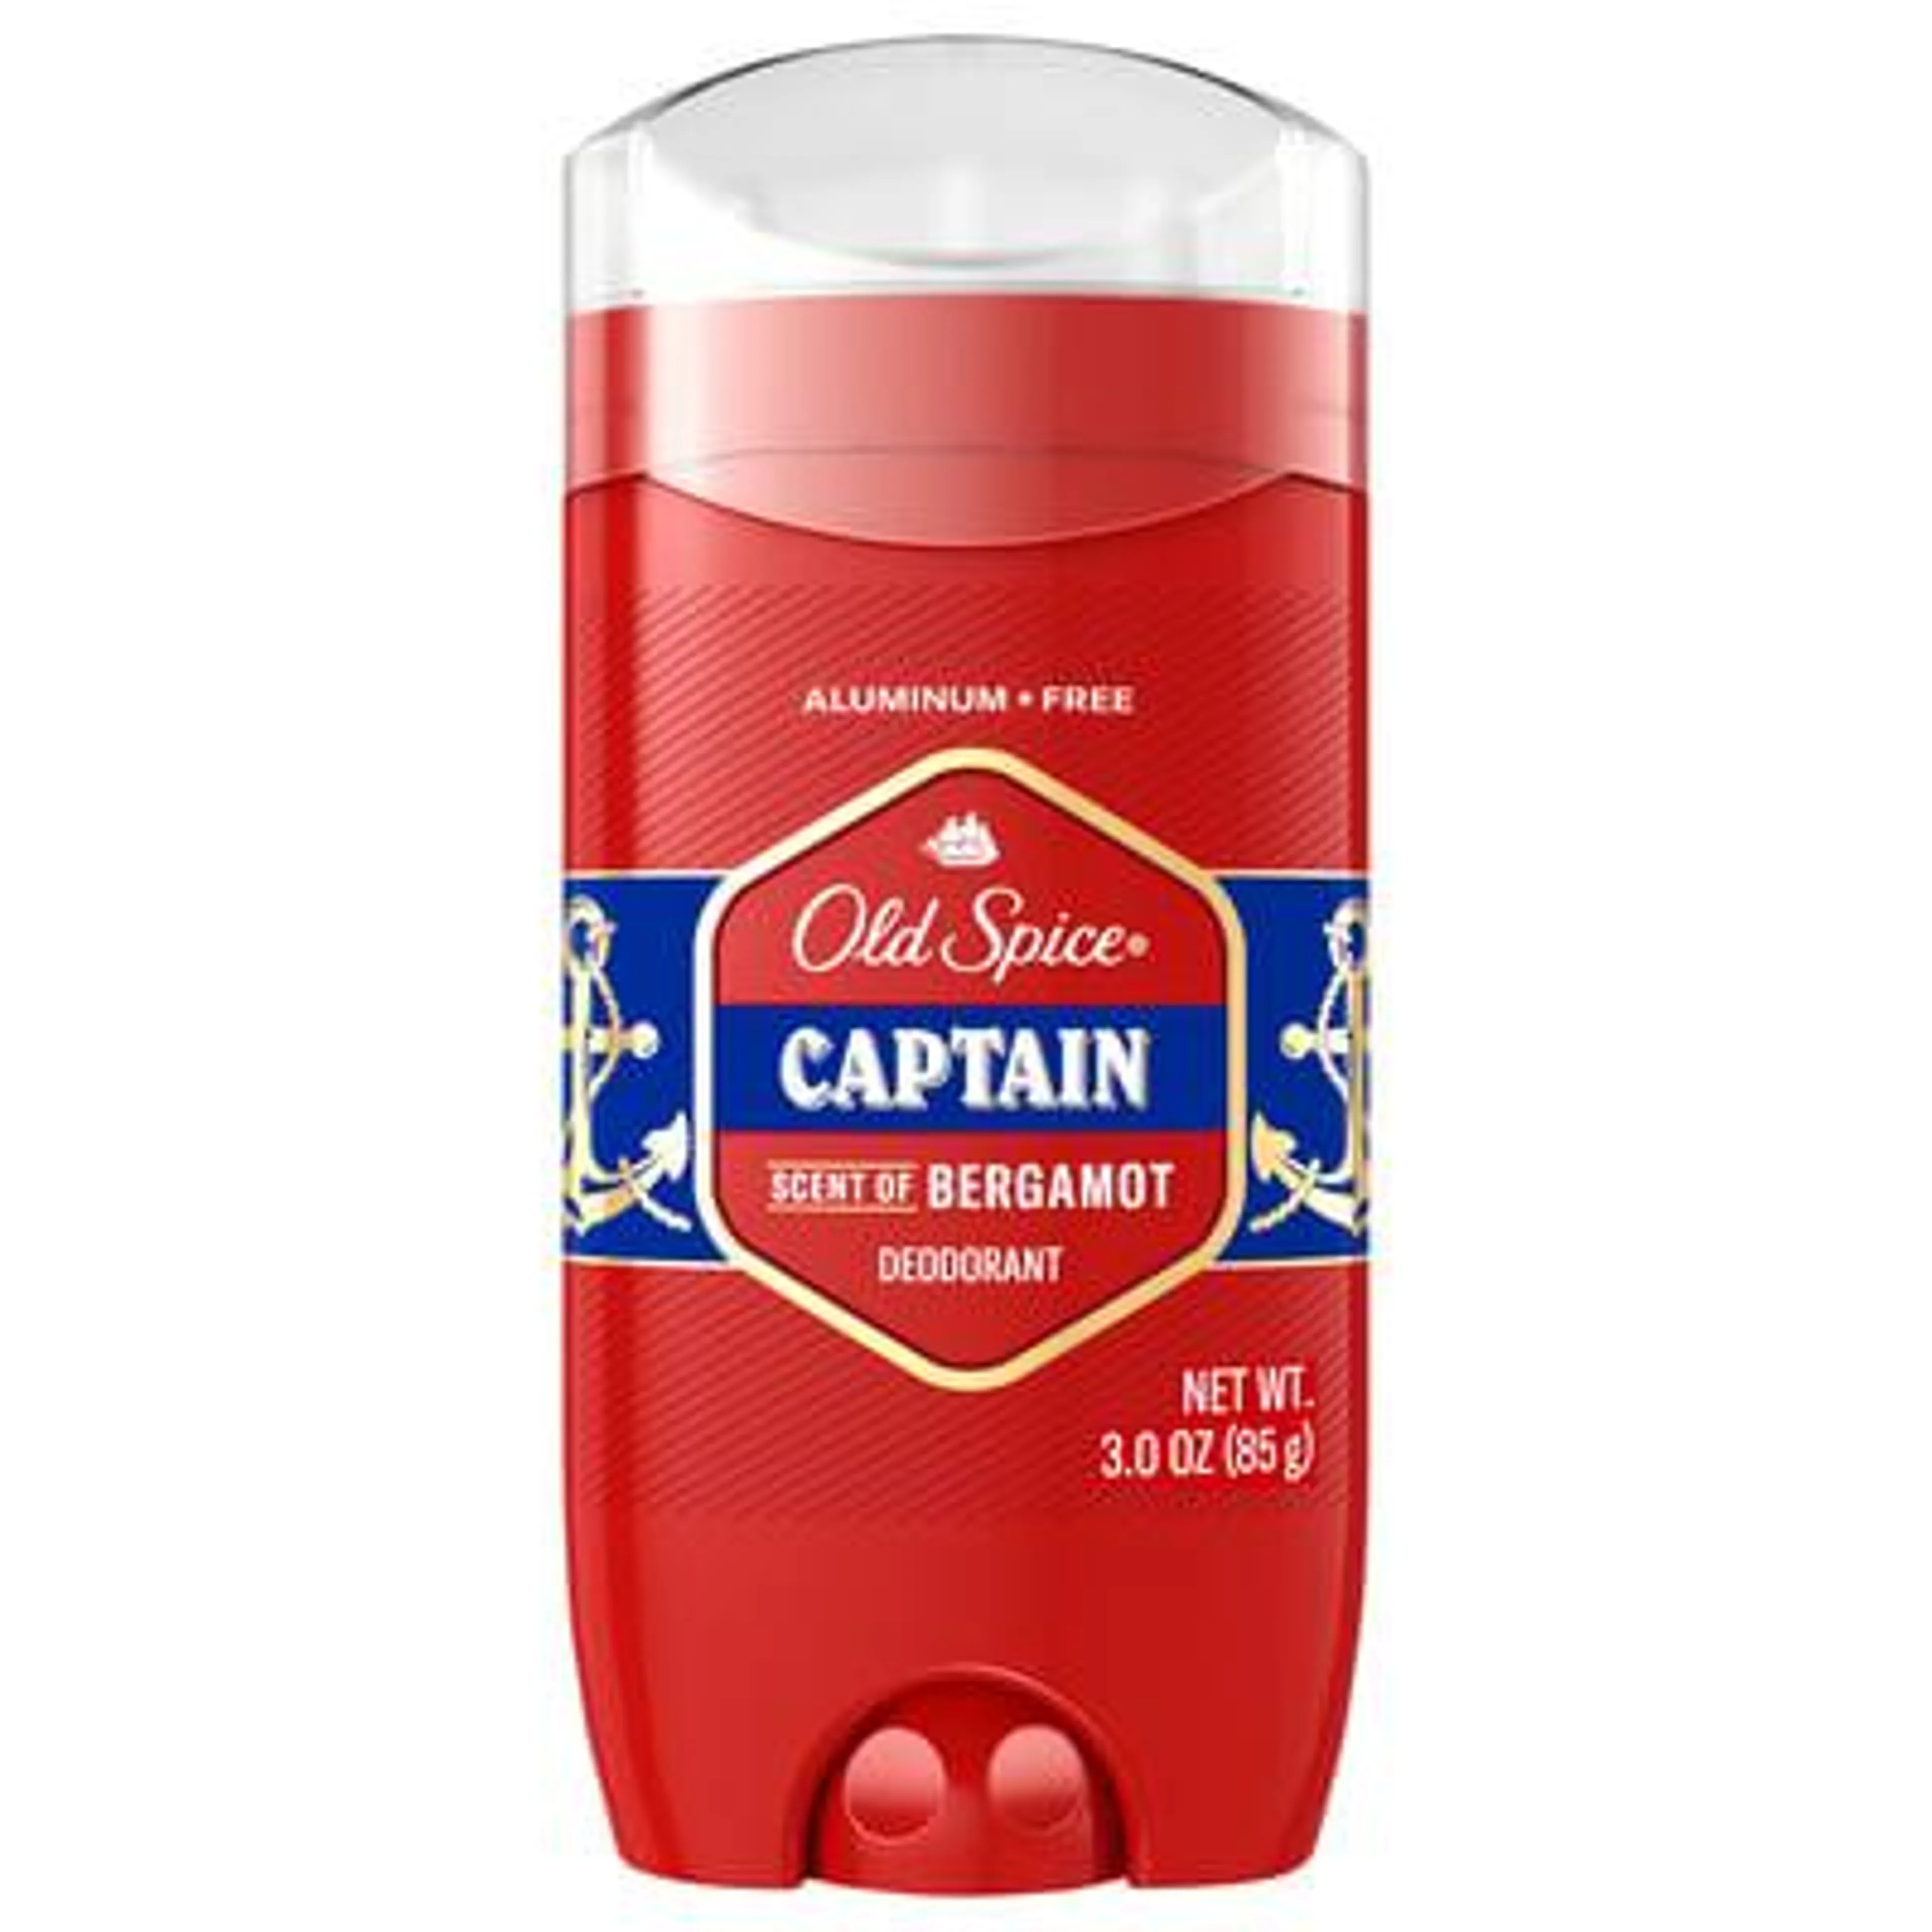 Old Spice, Captain - Deodorant, Scent of Bergamot